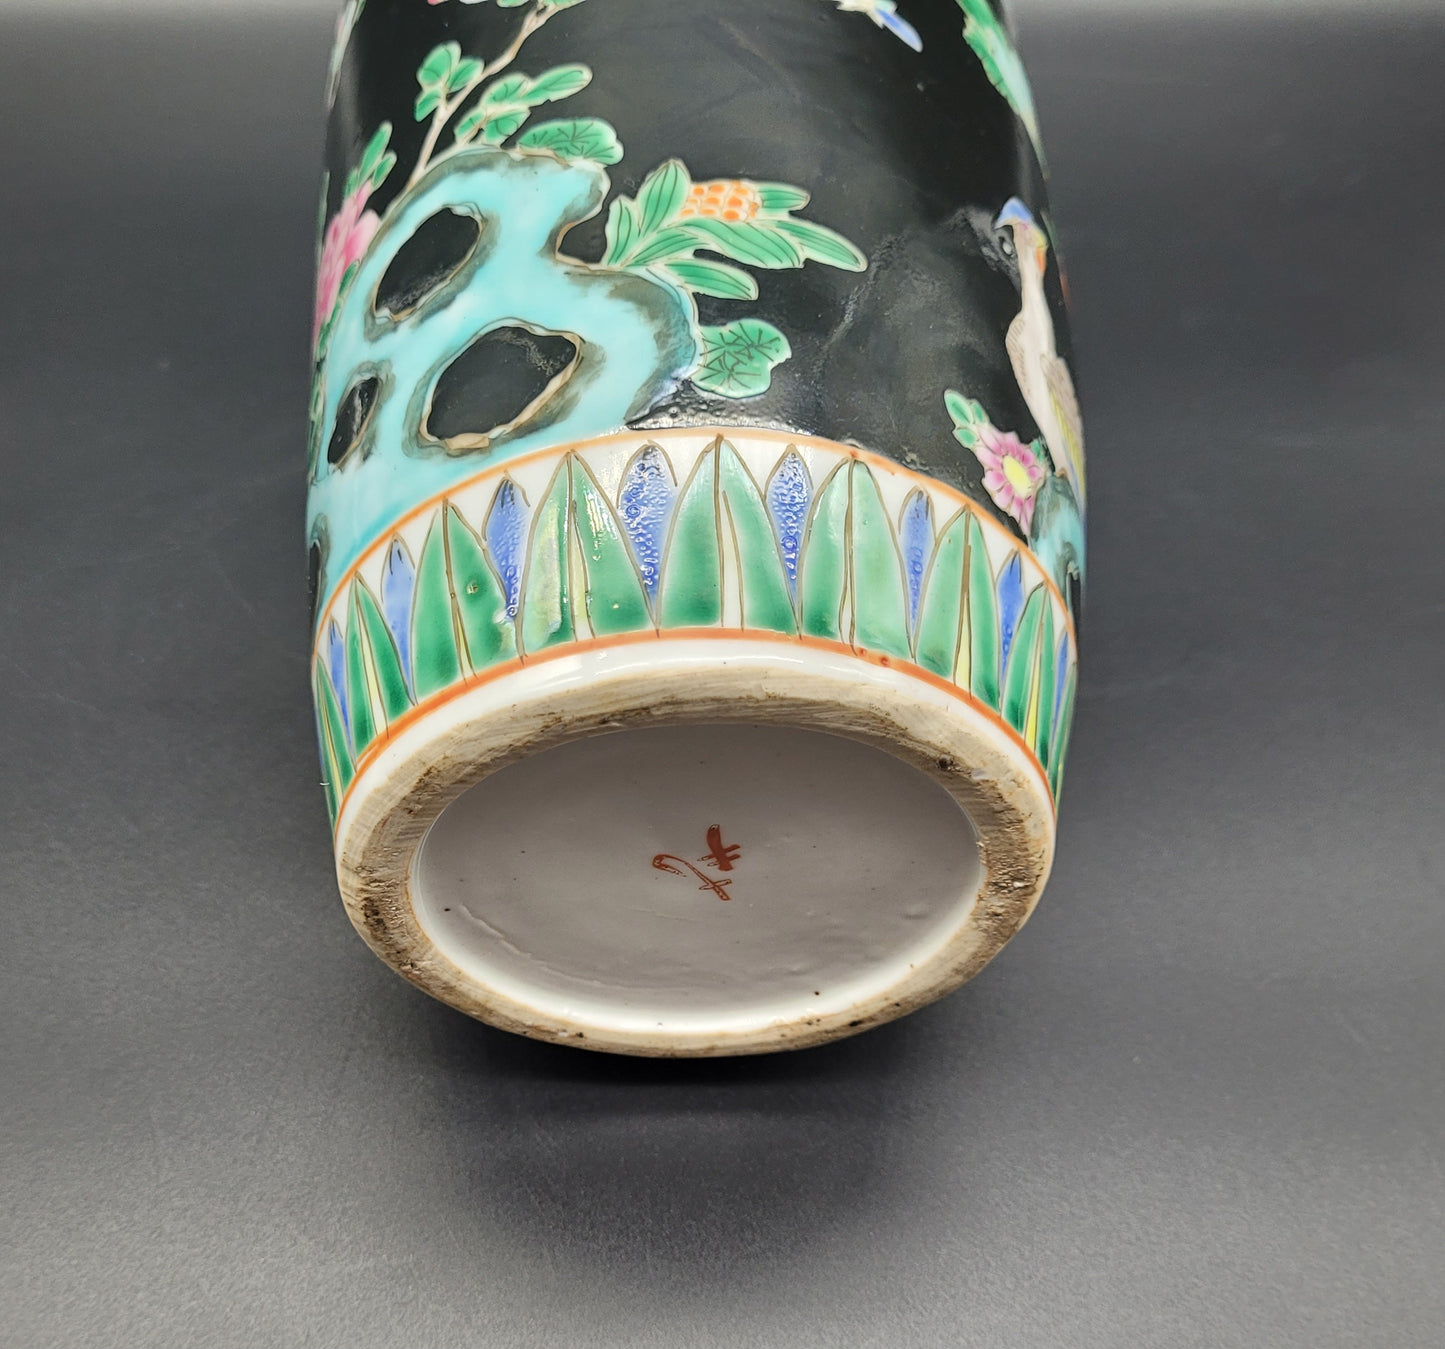 Antique Japanese 19th Century Vase Oriental Hand Painted